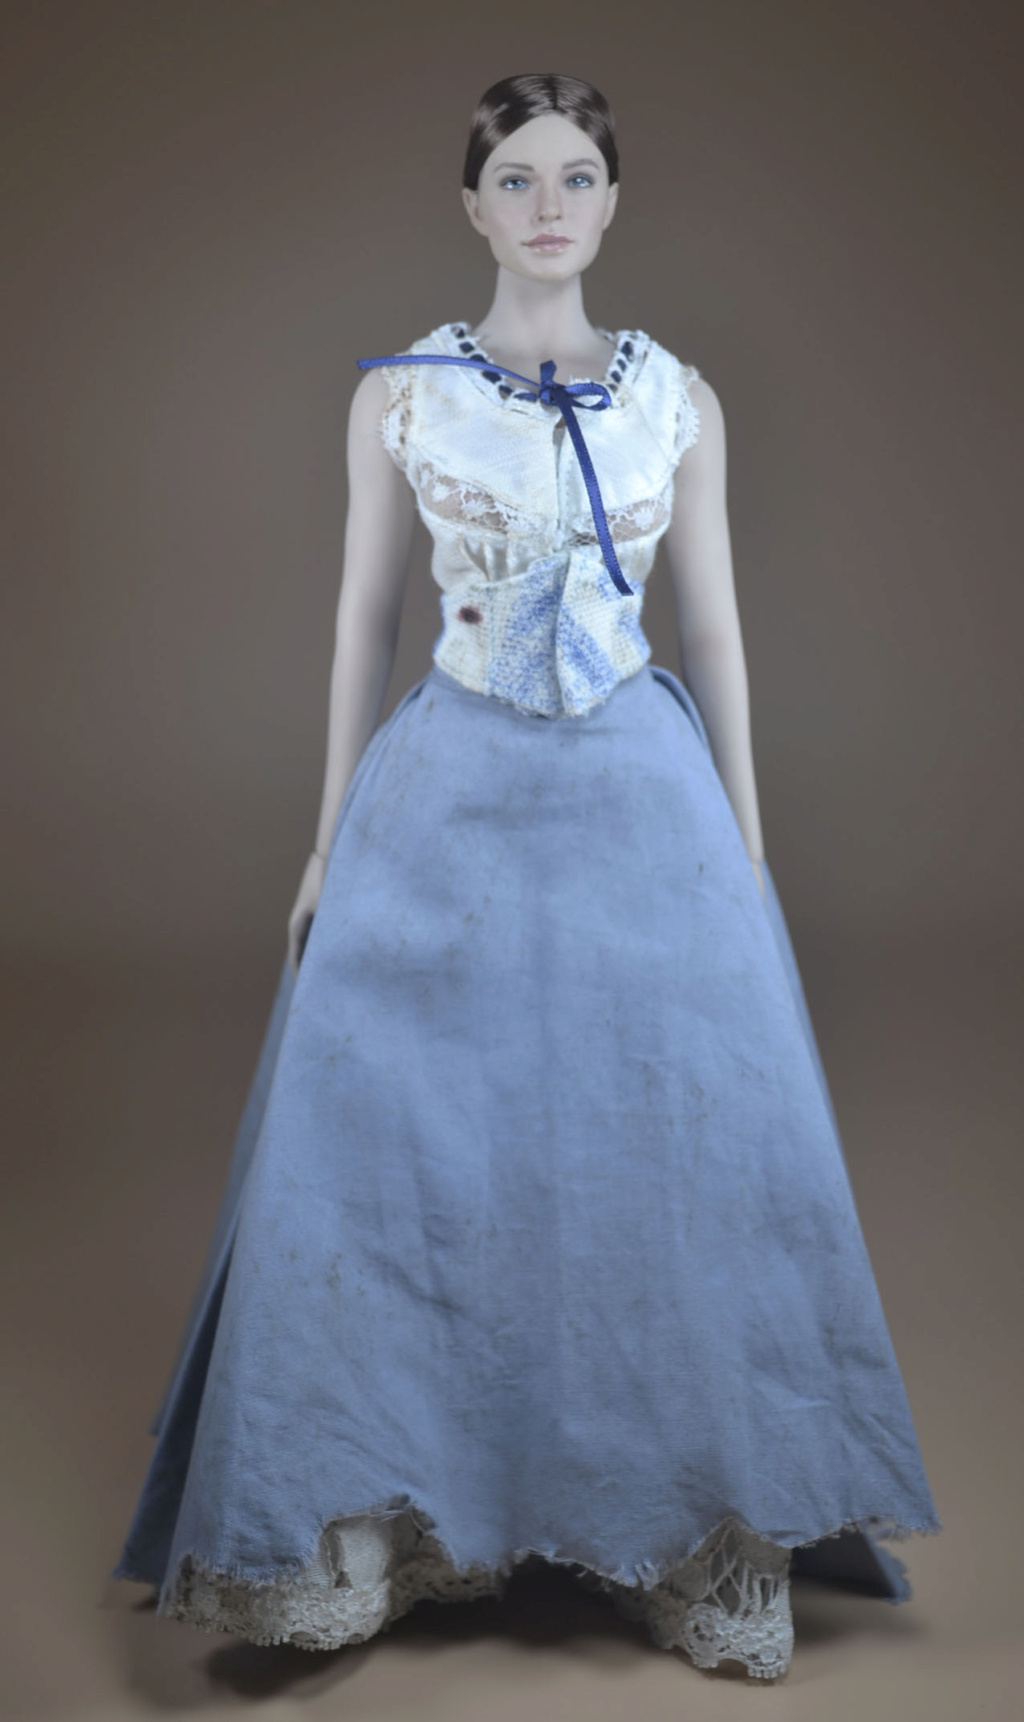 VintageDress - NEW PRODUCT: Wolford Toys: 1/6 Western Vintage Dress WF-2021AB _dsc3725